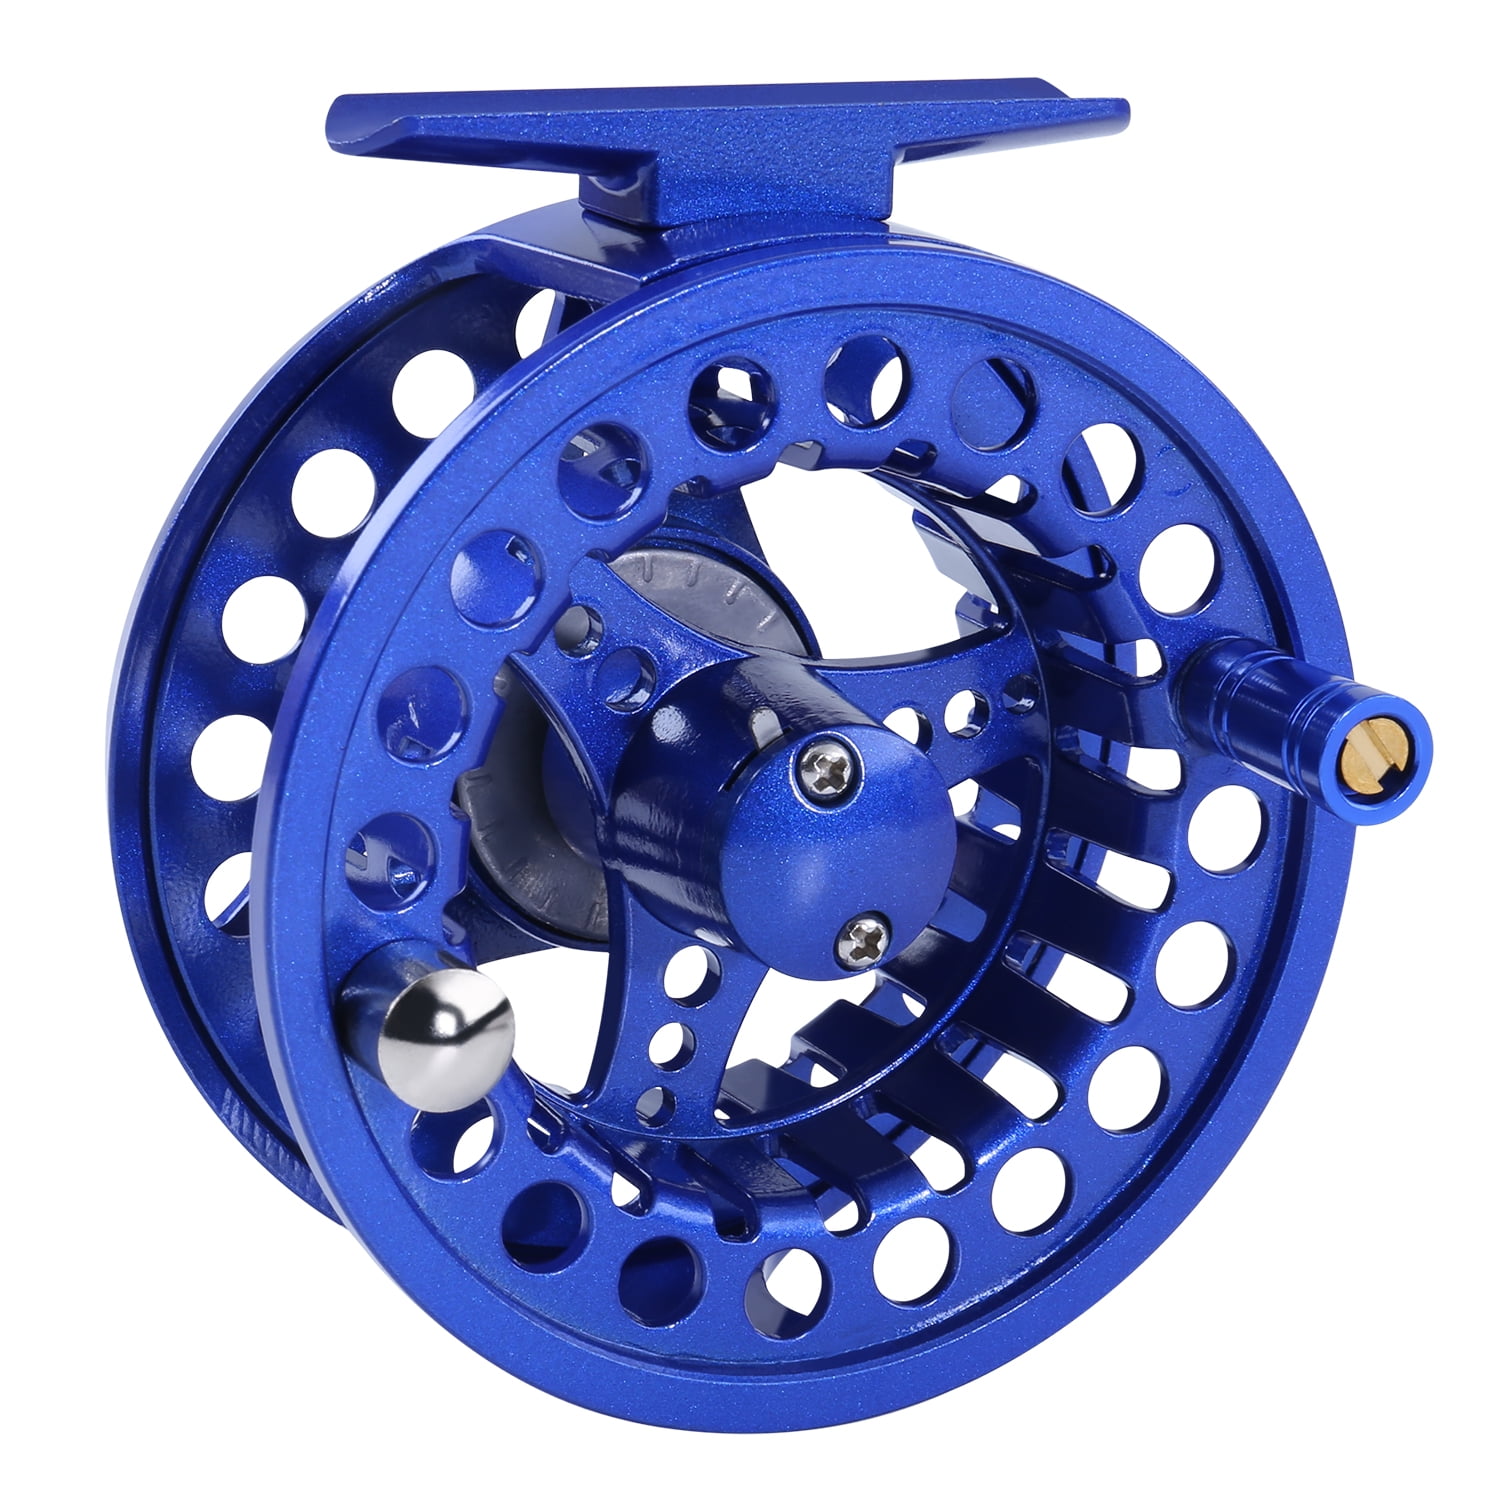 Sougayilang Fly Fishing Reel 5 Colors CNC Full Metal Aluminum 5/6wt Fishing Tackle, Size: Large, Blue